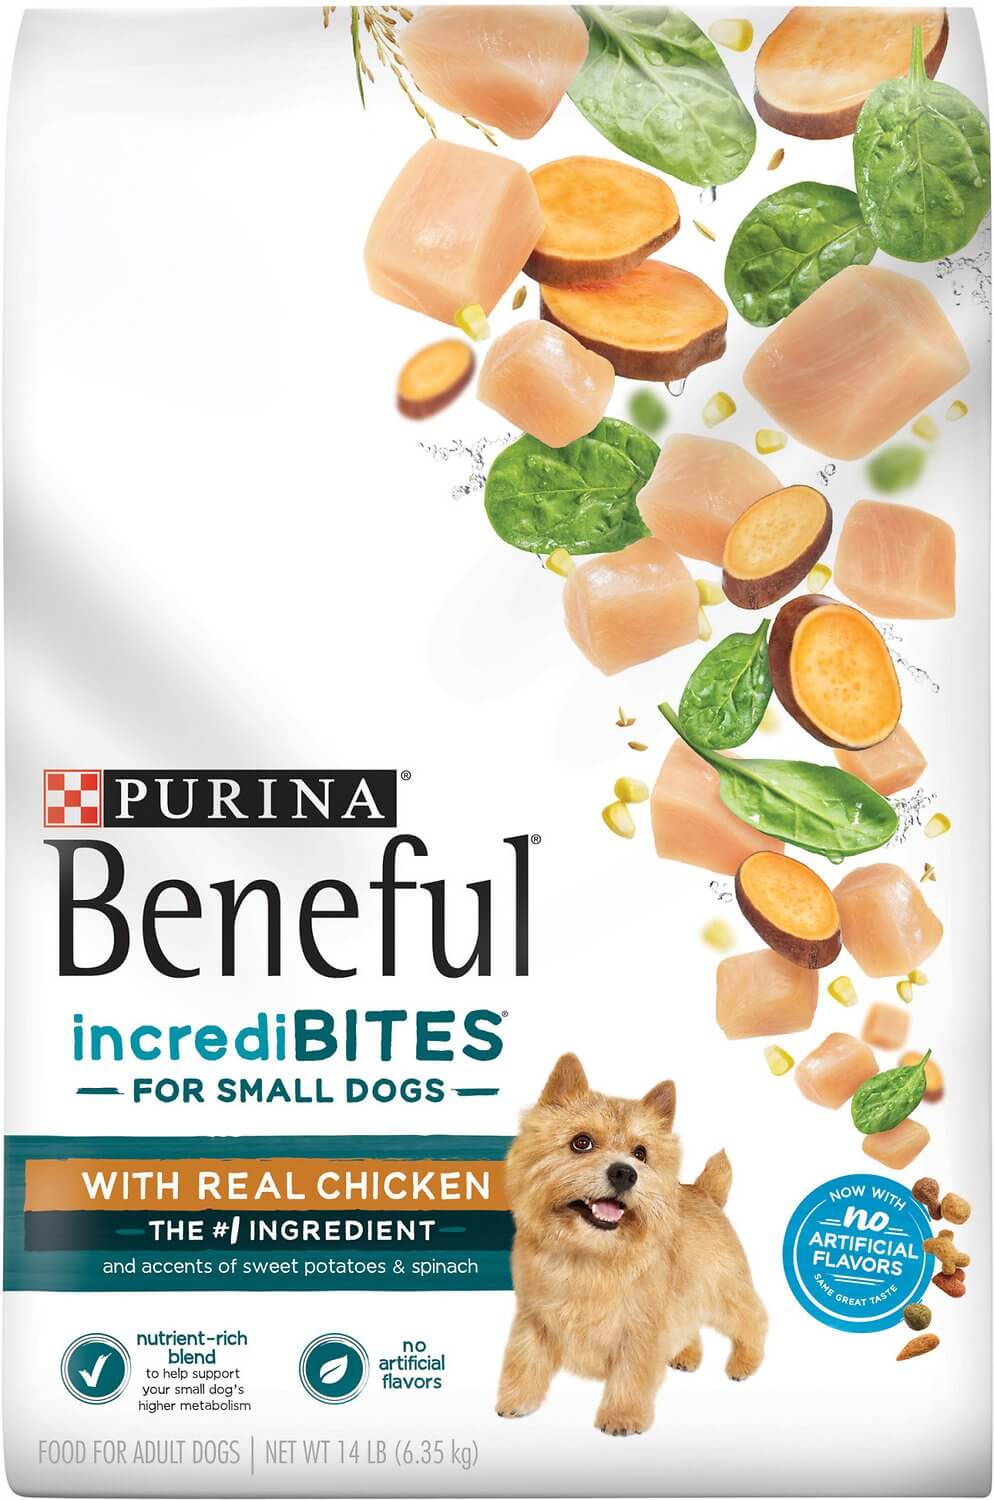 beneful dog food on sale